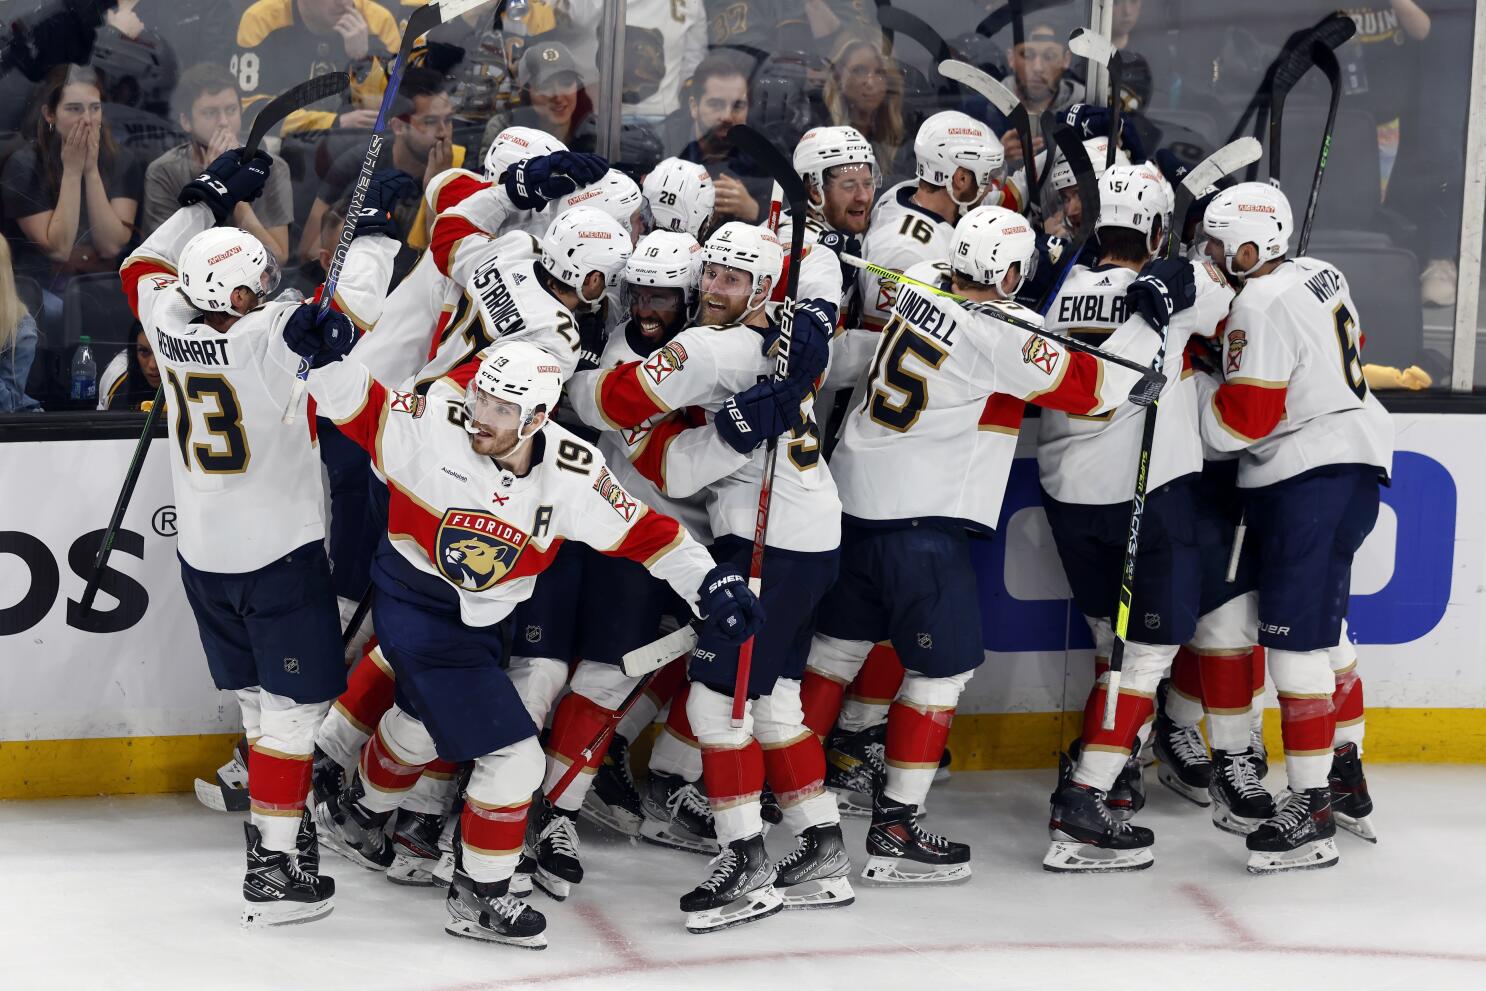 Bruins make history against the Flyers, setting the single-season